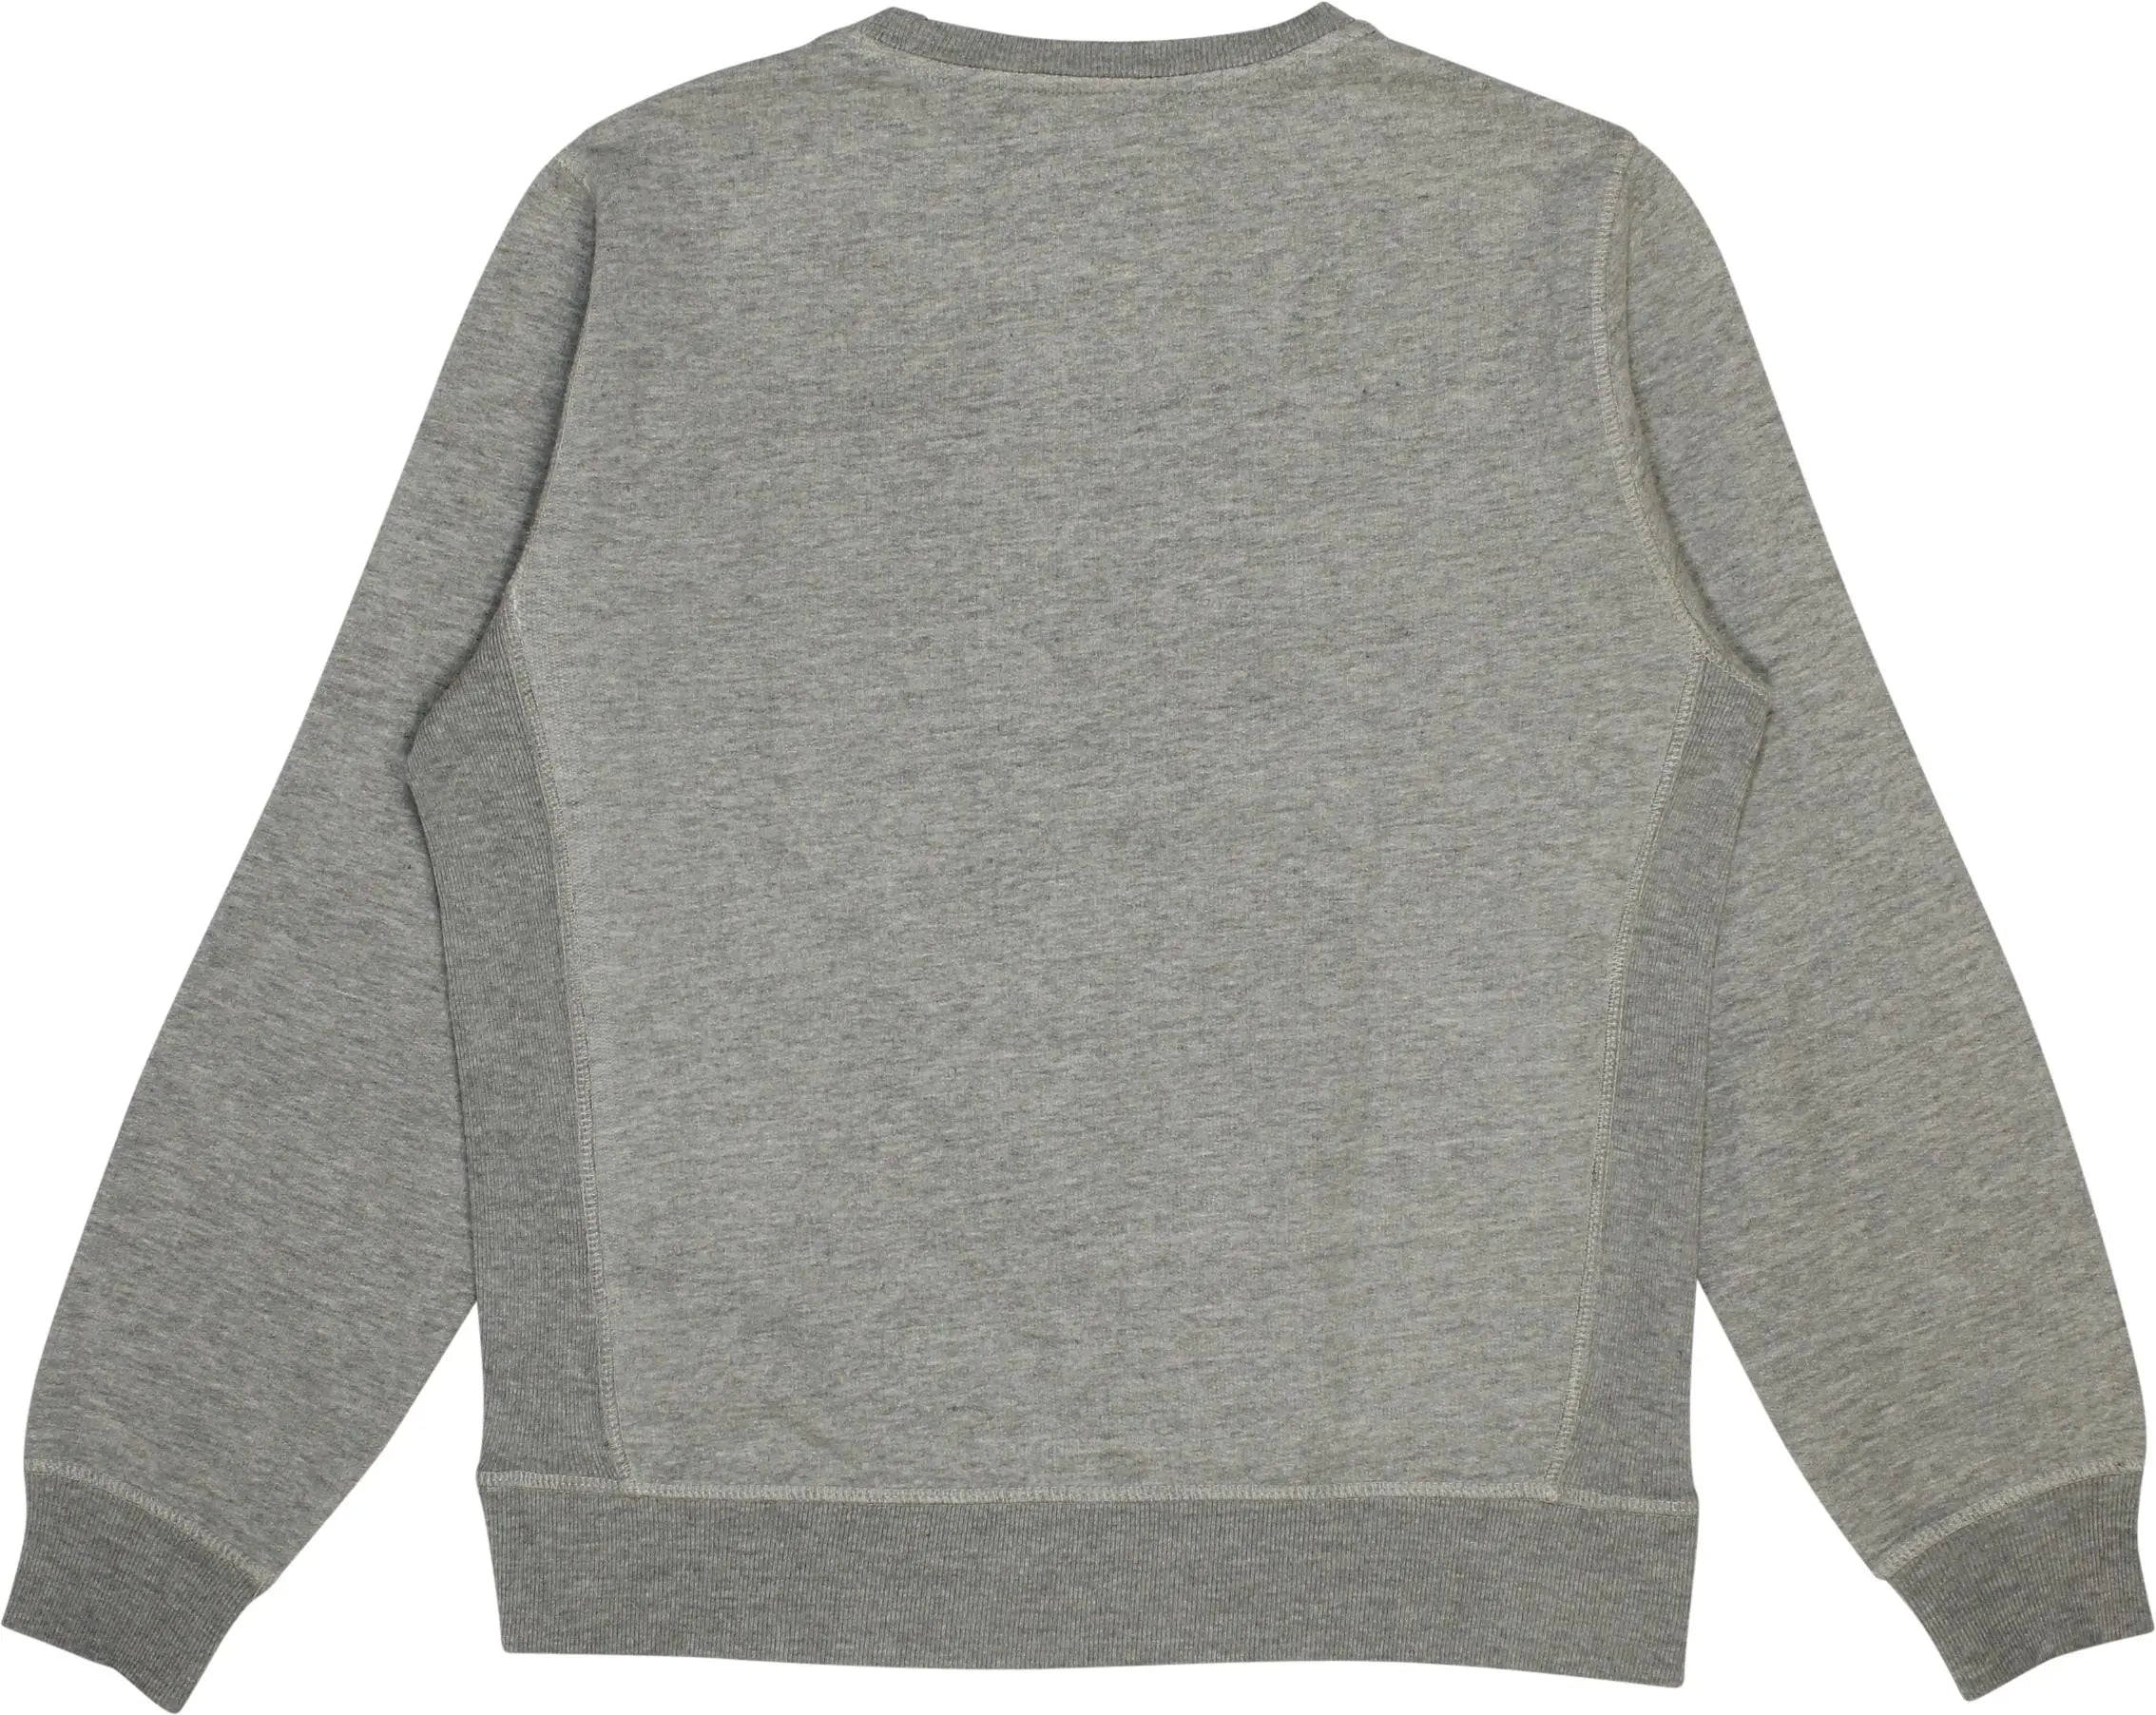 Terranova - Grey Sweatshirt- ThriftTale.com - Vintage and second handclothing